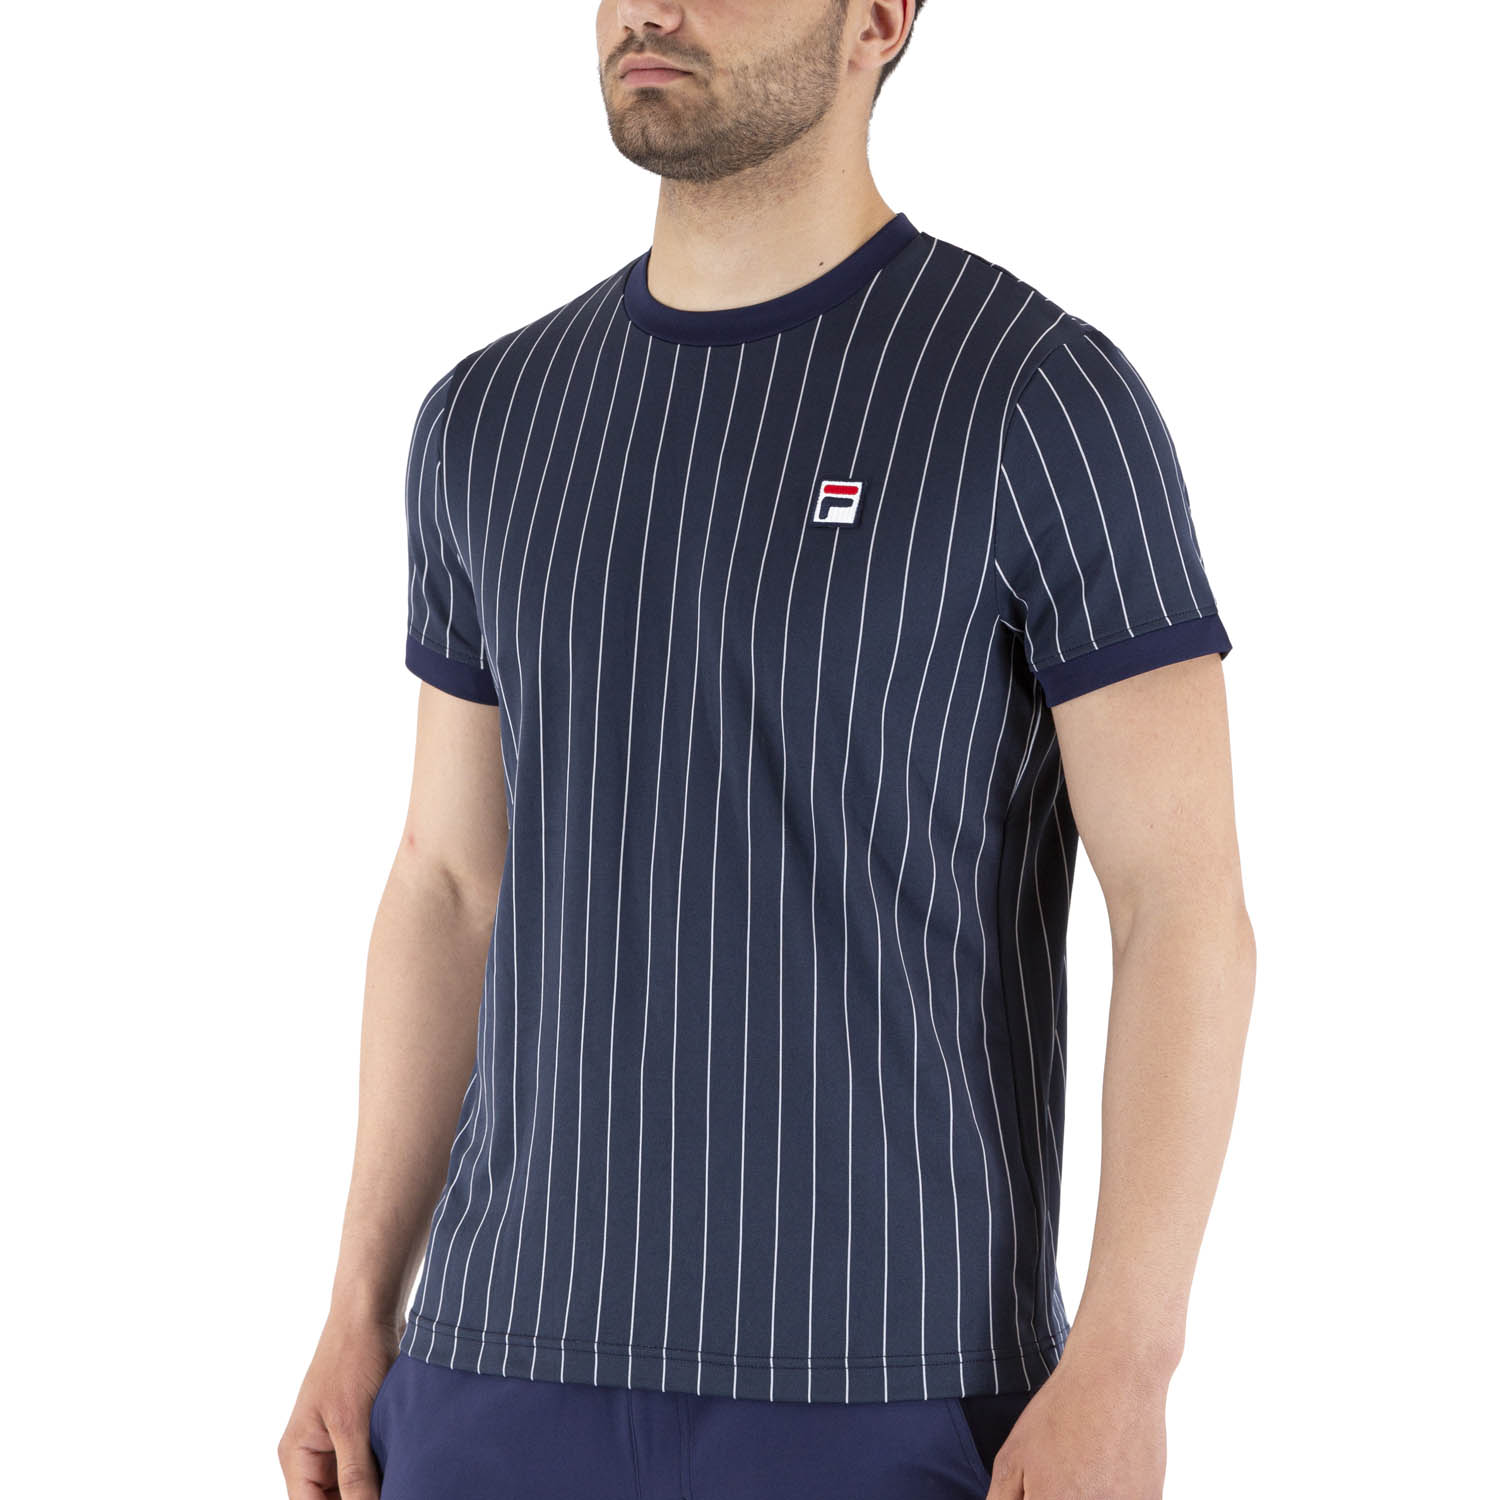 Fila Stripes T-Shirt - Navy/White